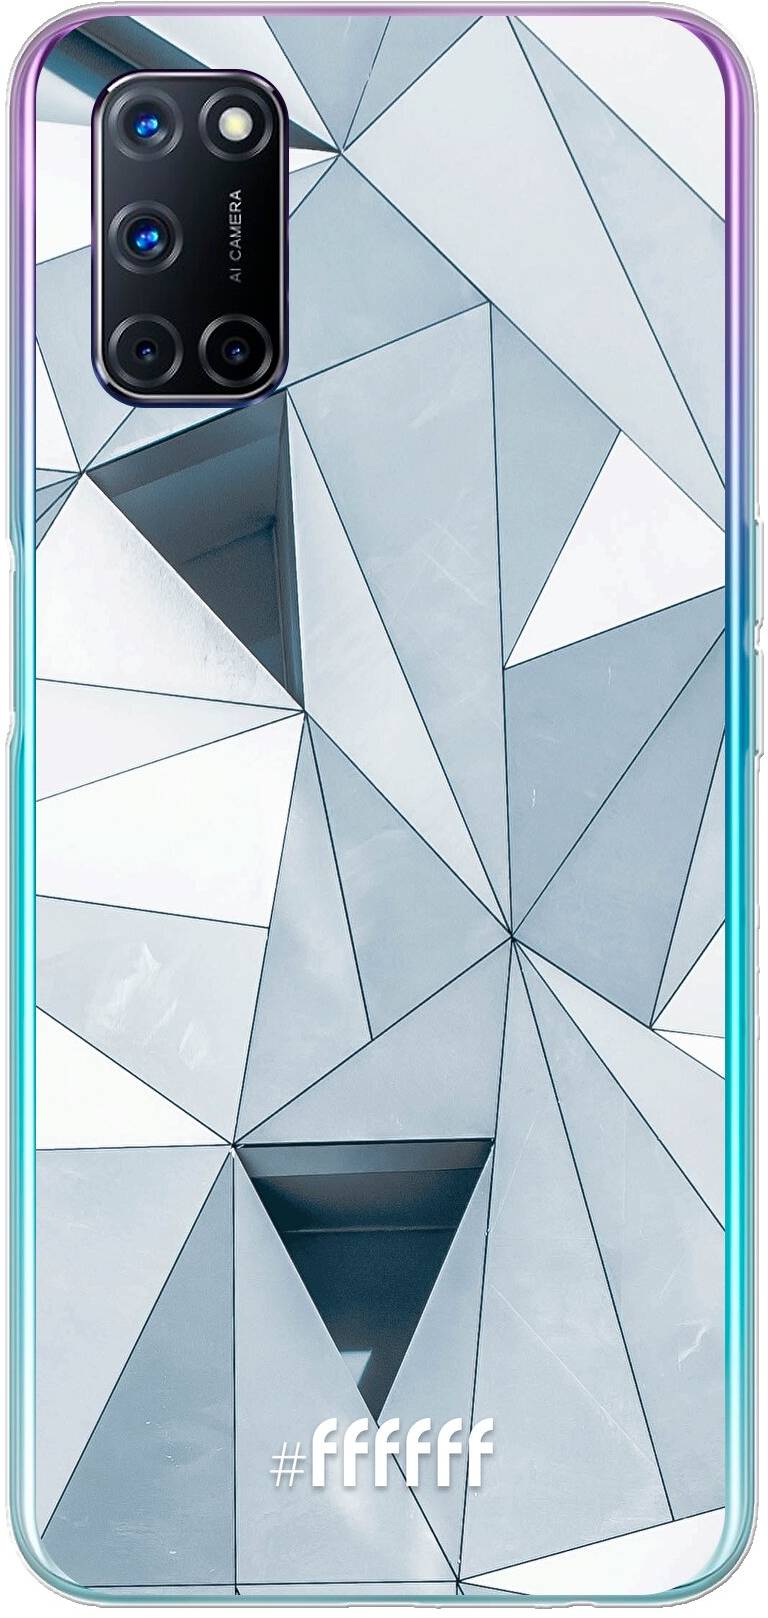 Mirrored Polygon A72